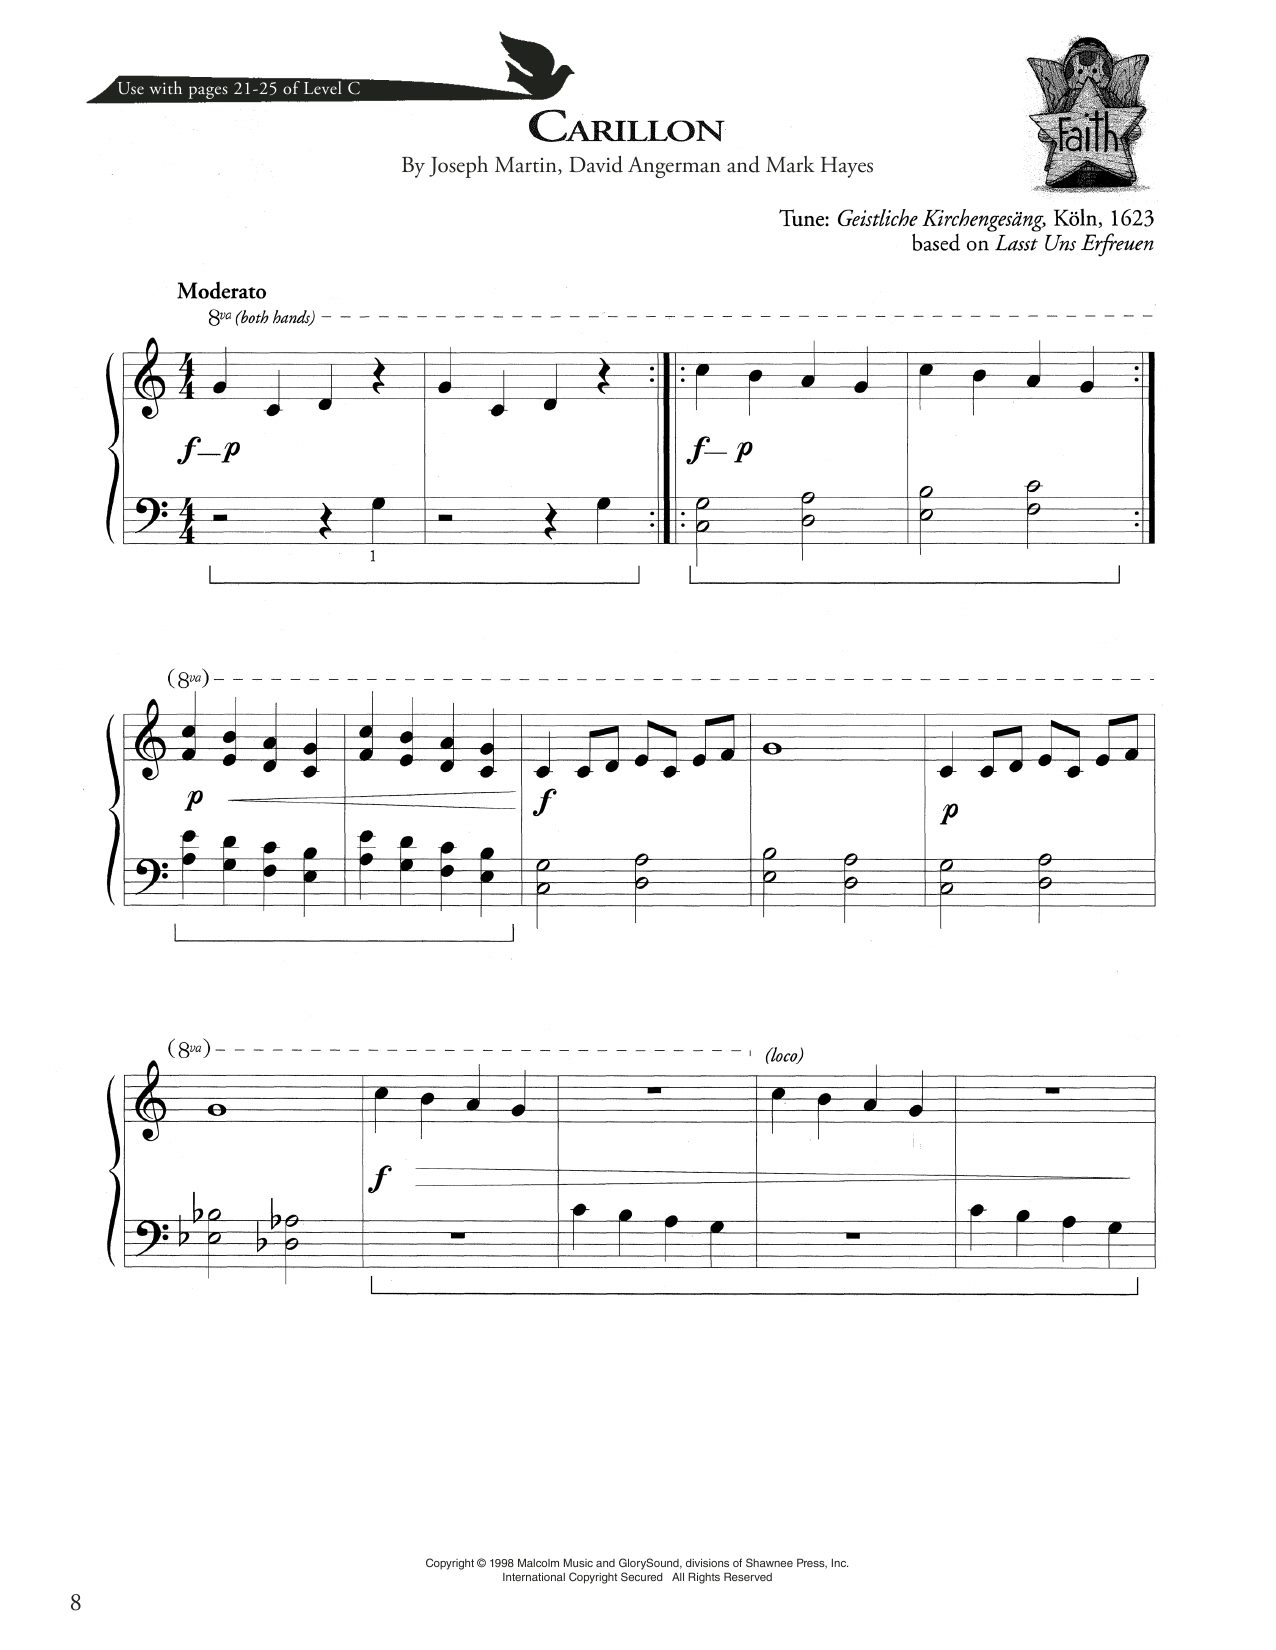 Joseph Martin, David Angerman and Mark Hayes Carillon Sheet Music Notes & Chords for Piano Method - Download or Print PDF